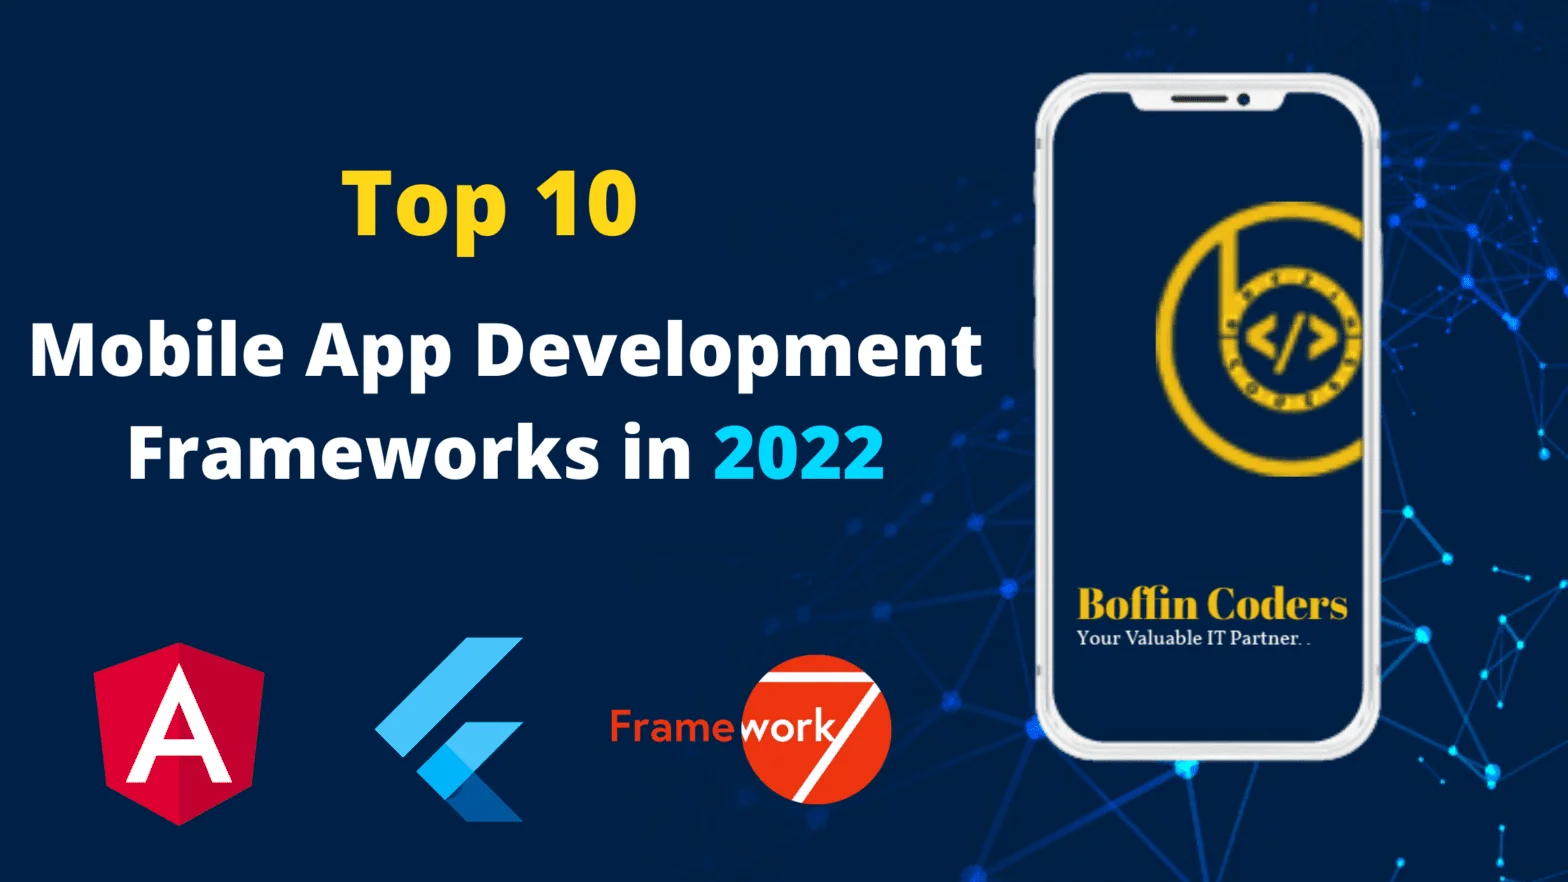 Top 10 Mobile App Development Frameworks in 2022